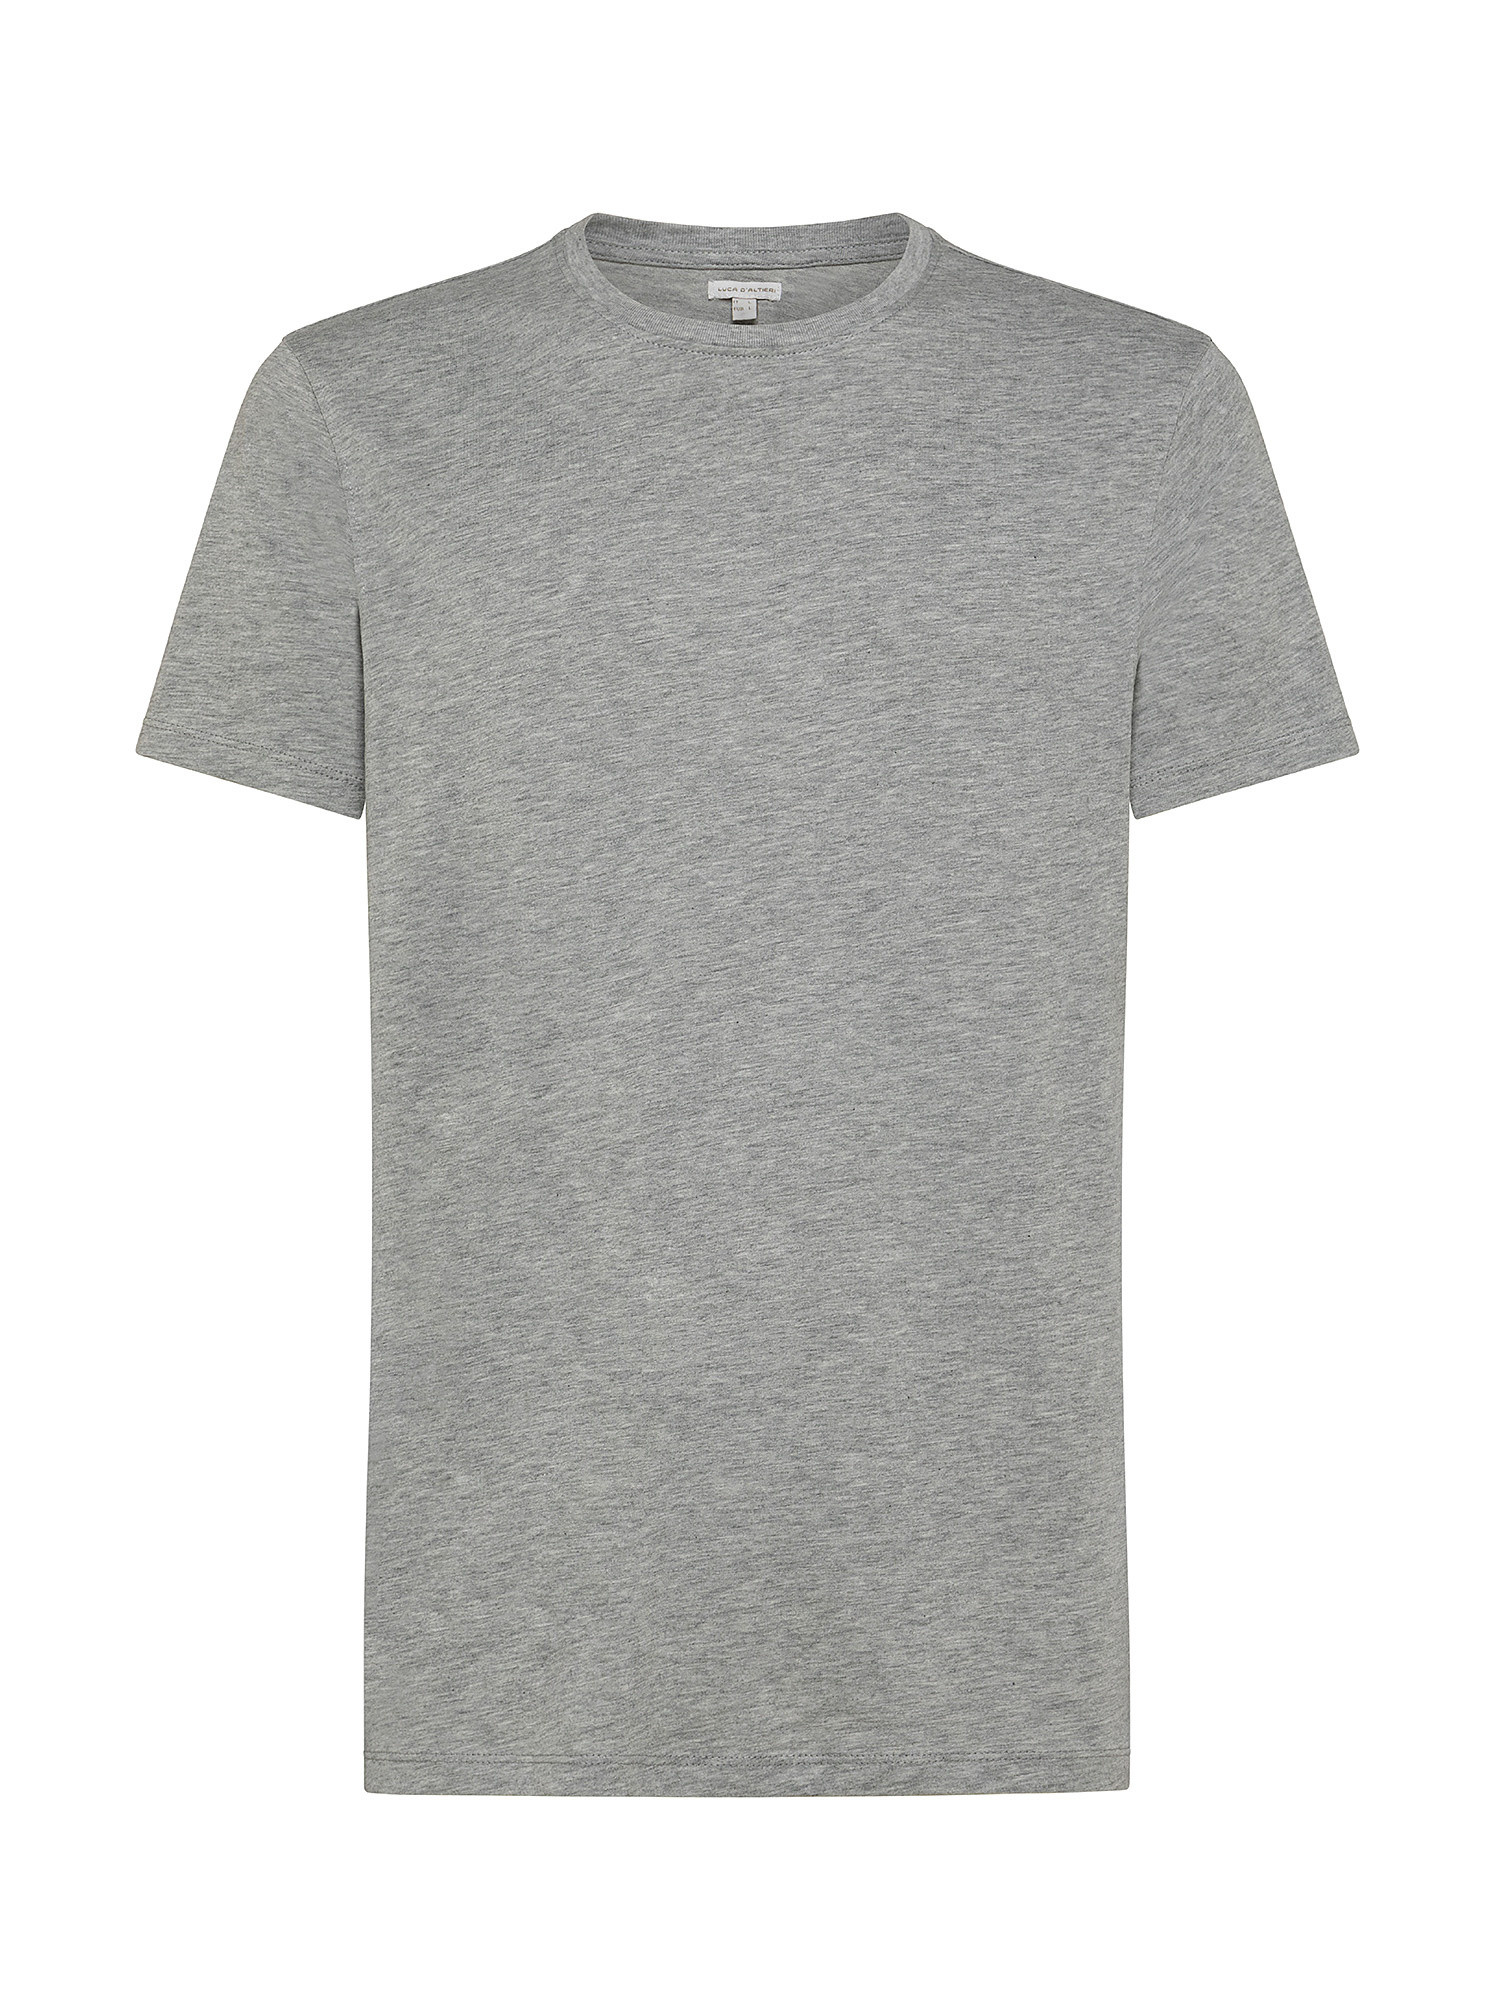 Luca D'Altieri - Crew neck supima cotton T-shirt, Grey, large image number 0